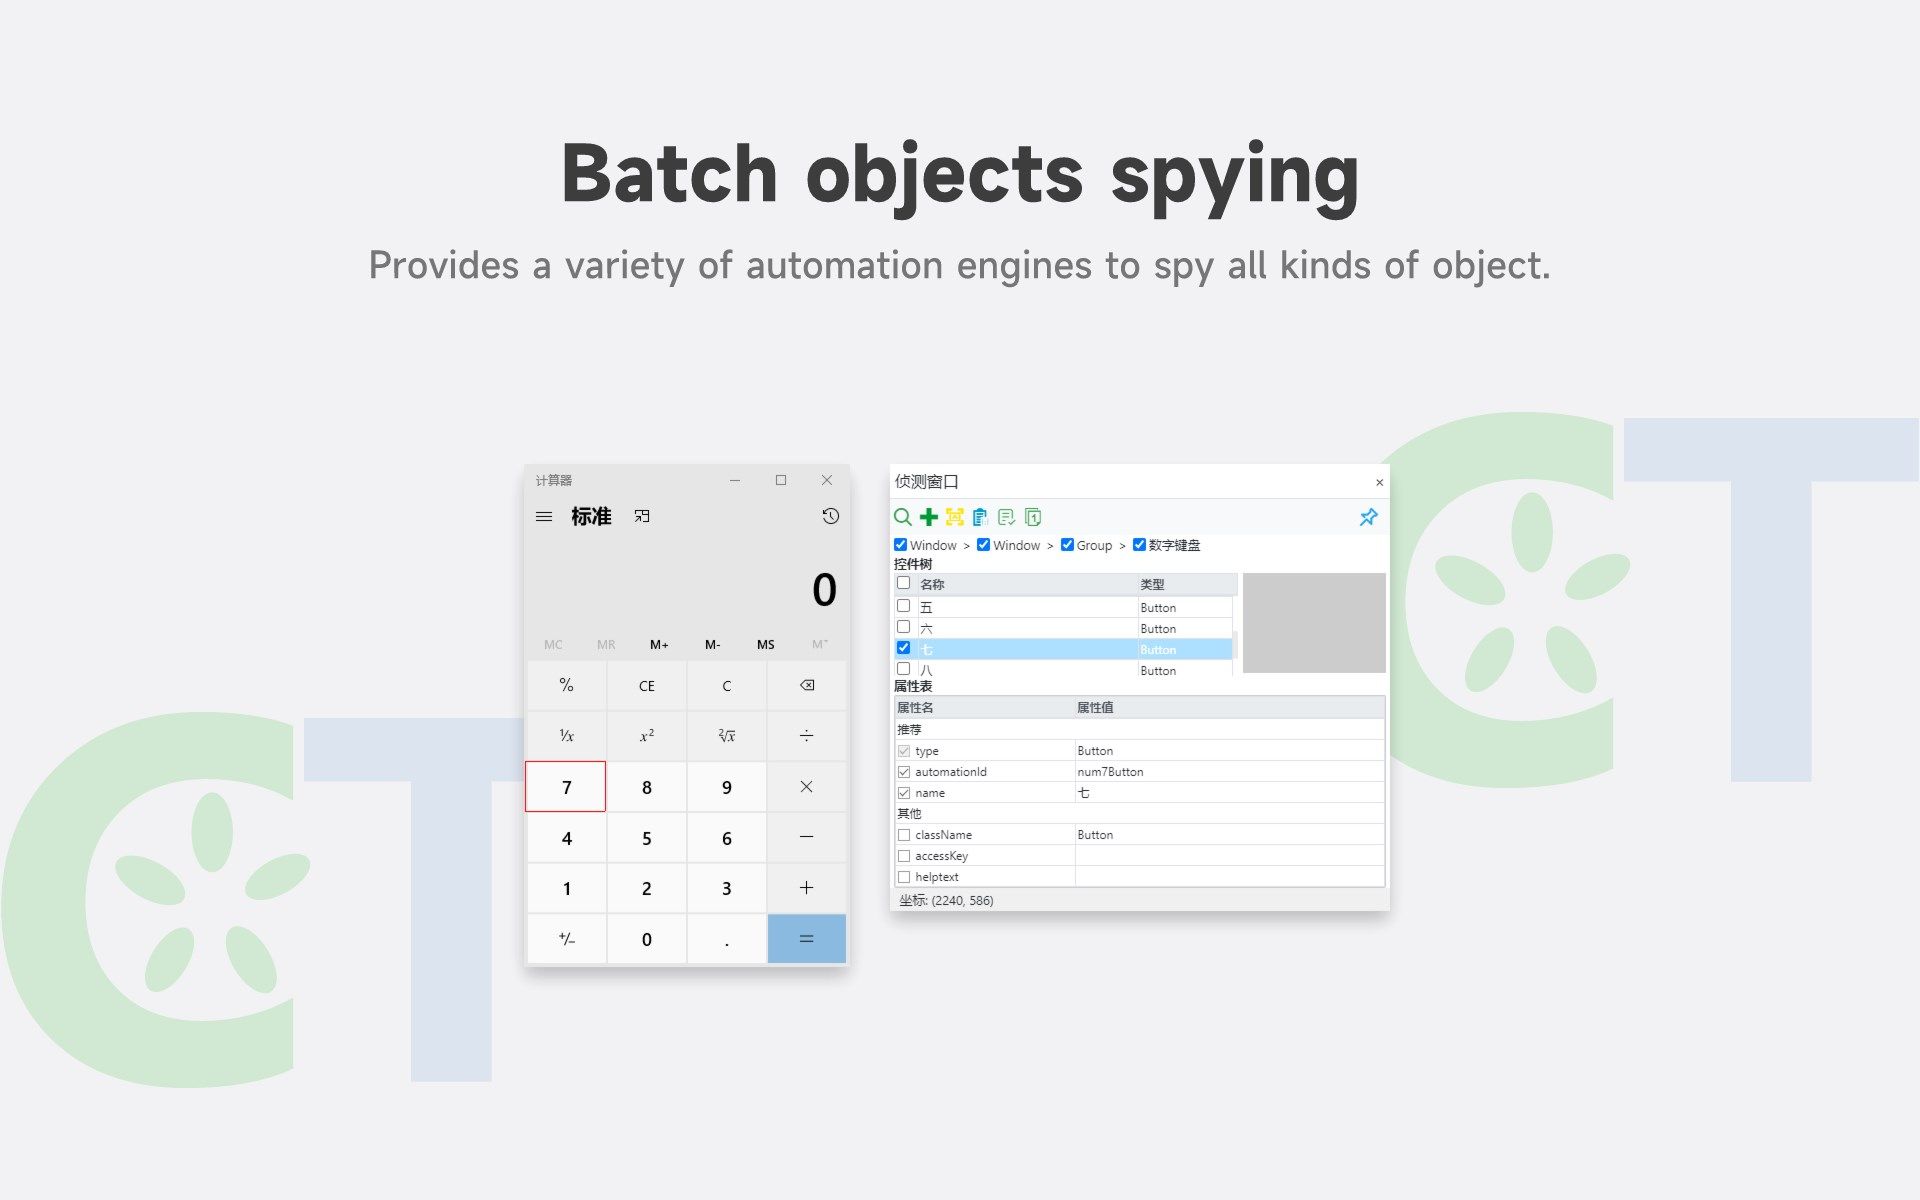 Batch objects spying